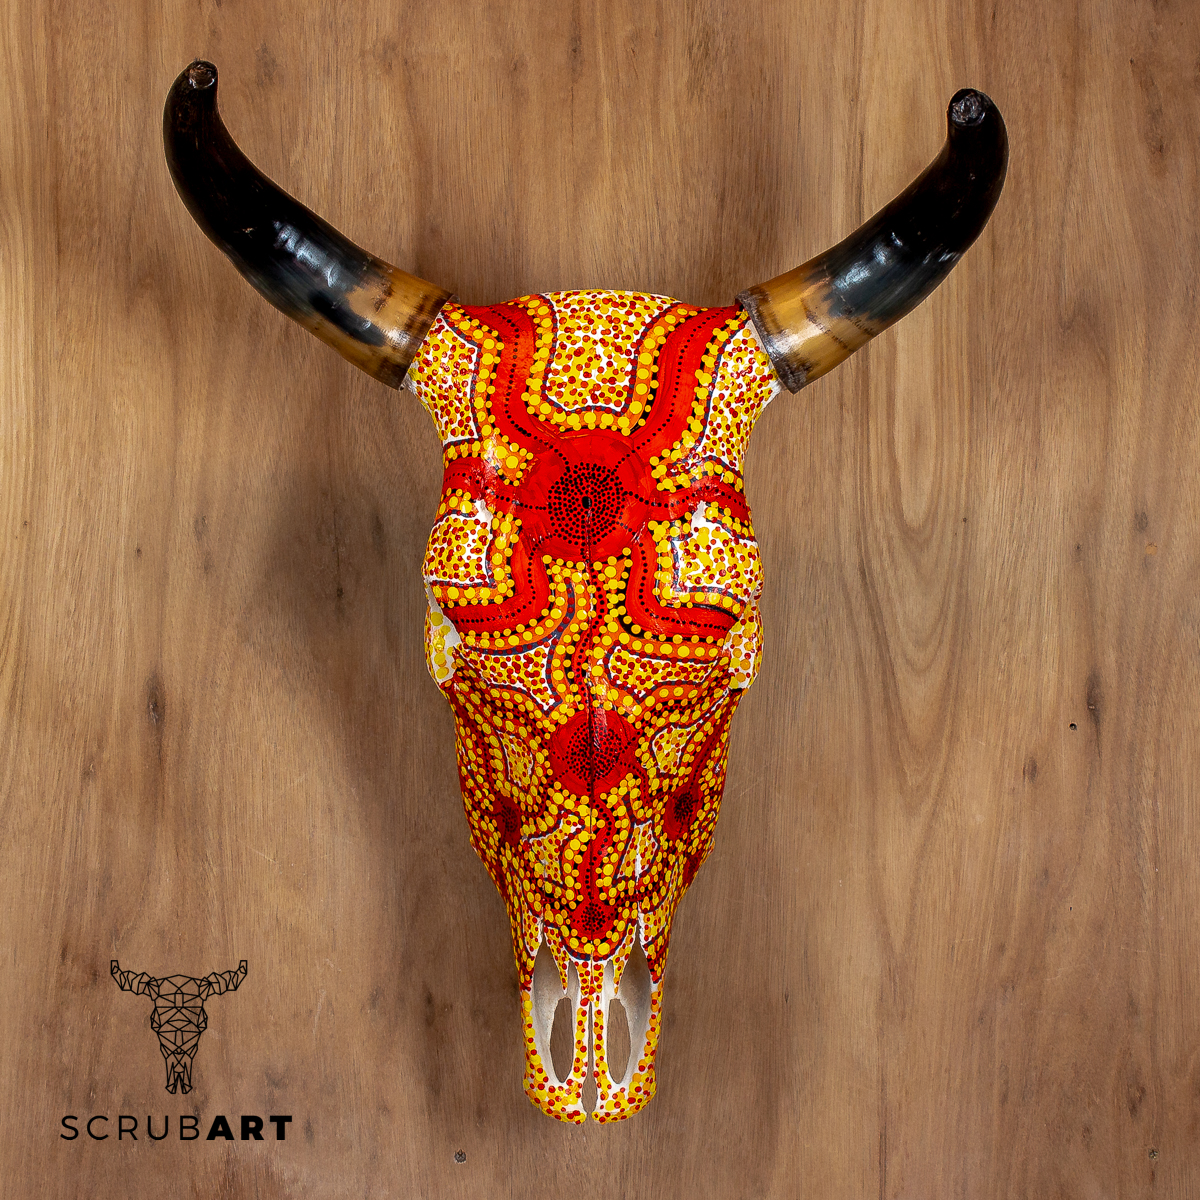 Painted Bull Skull with Horns